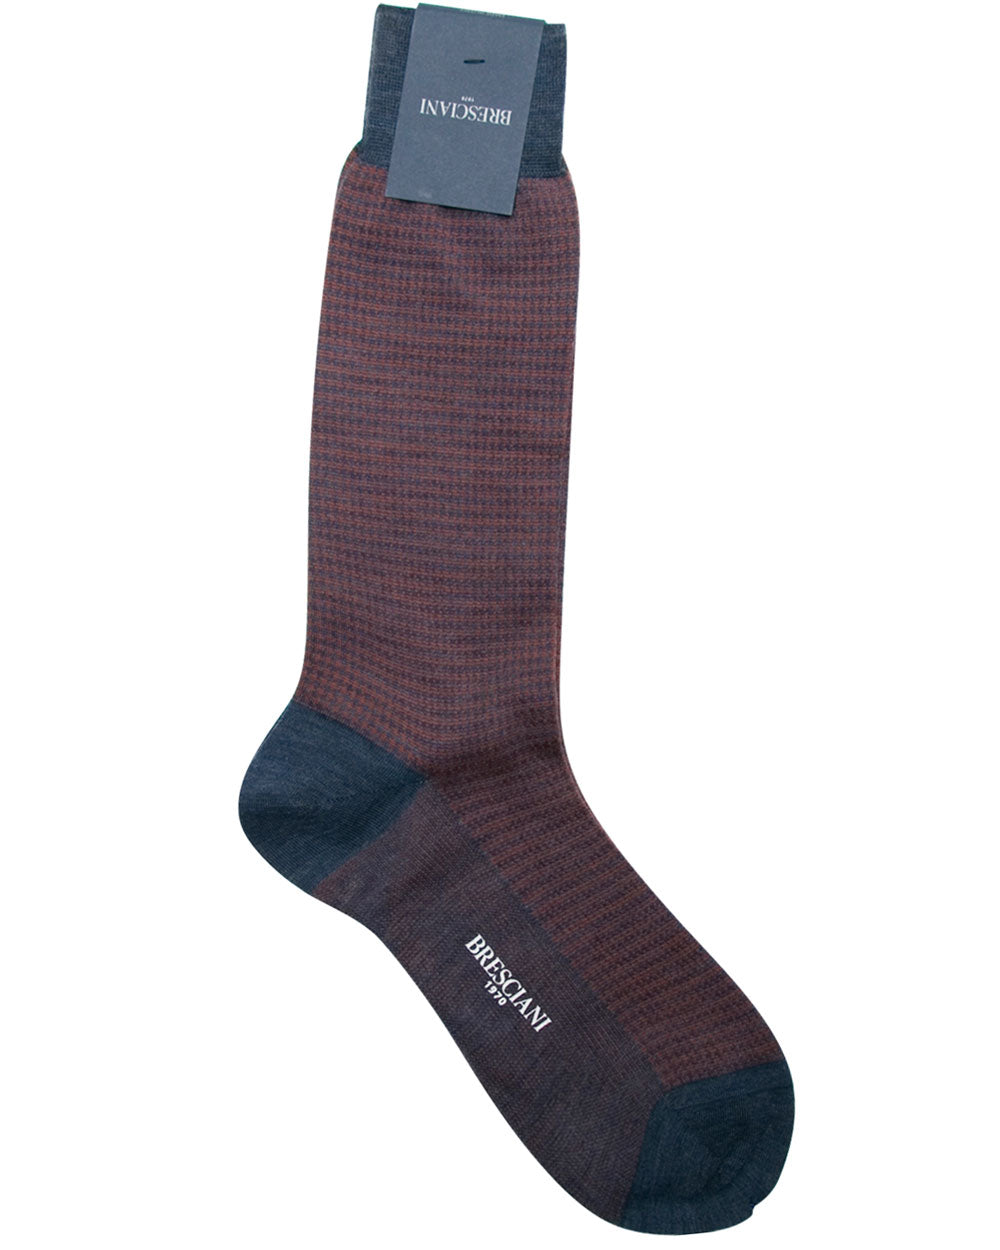 Blue and Terra Cotta Merino Wool Houndstooth Midcalf Socks